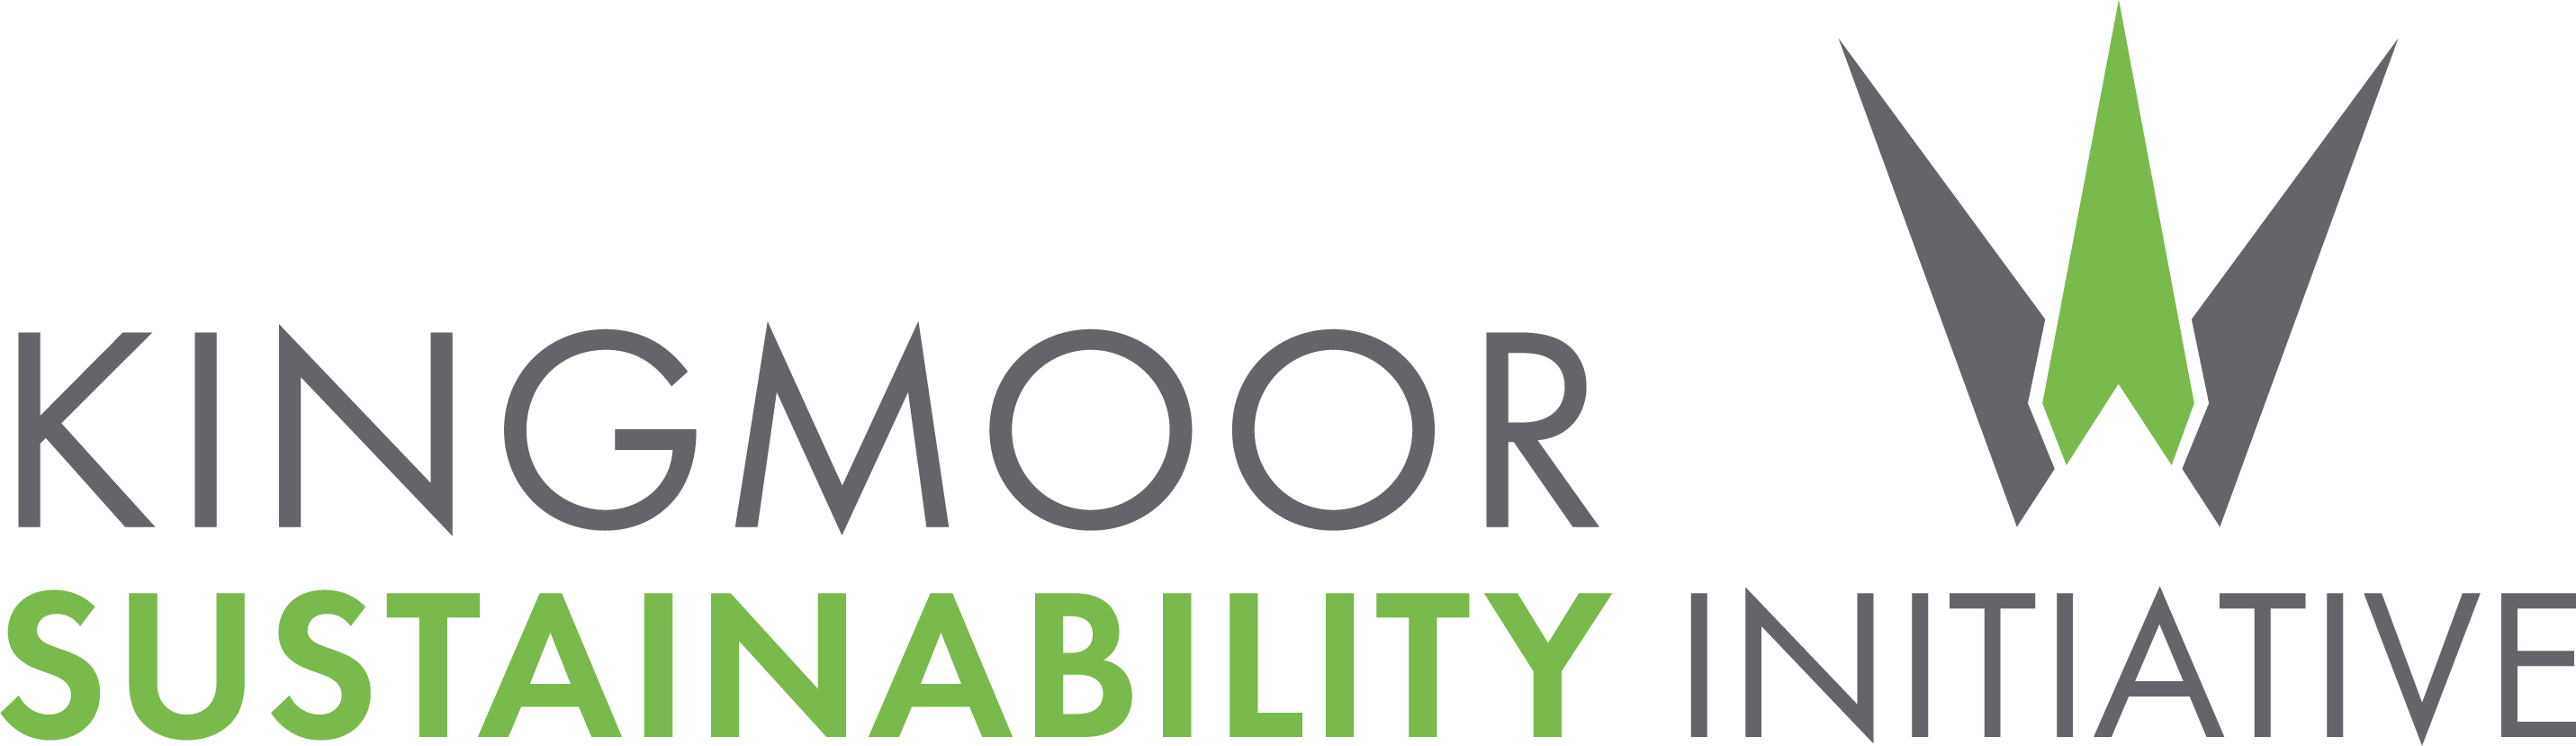 Kingmoor Sustainability Initiative